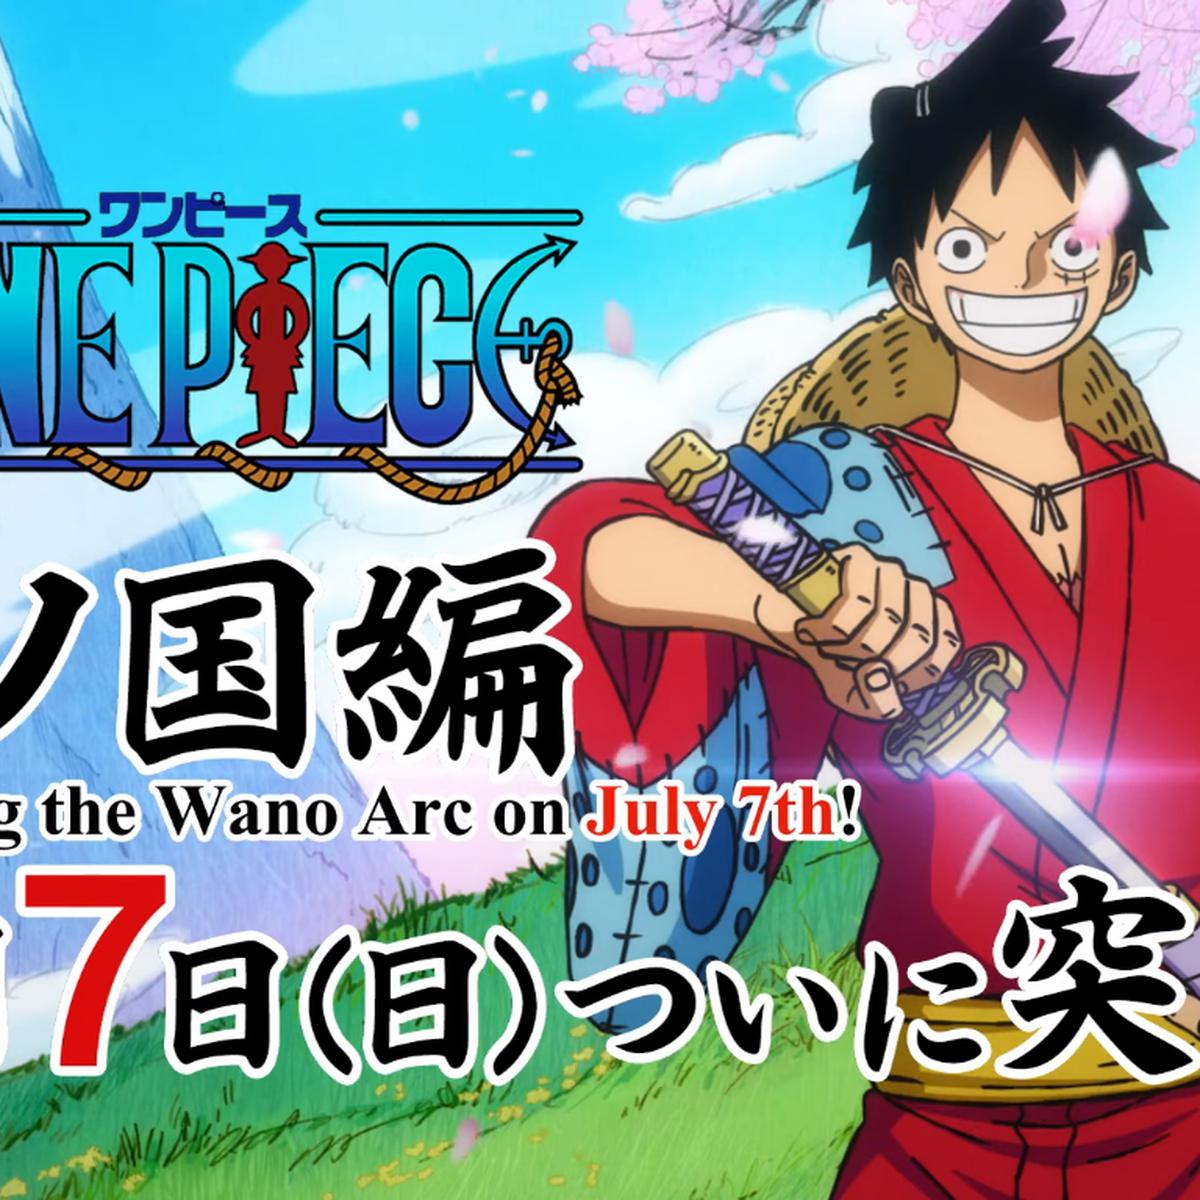 One Piece”, manga 1065 online en español vía MangaPlus: ¿cuándo se  publicará el nuevo capítulo del shonen?, Eiichiro Oda, Shonen Jump, Anime, Perú, México, Japón, Animes